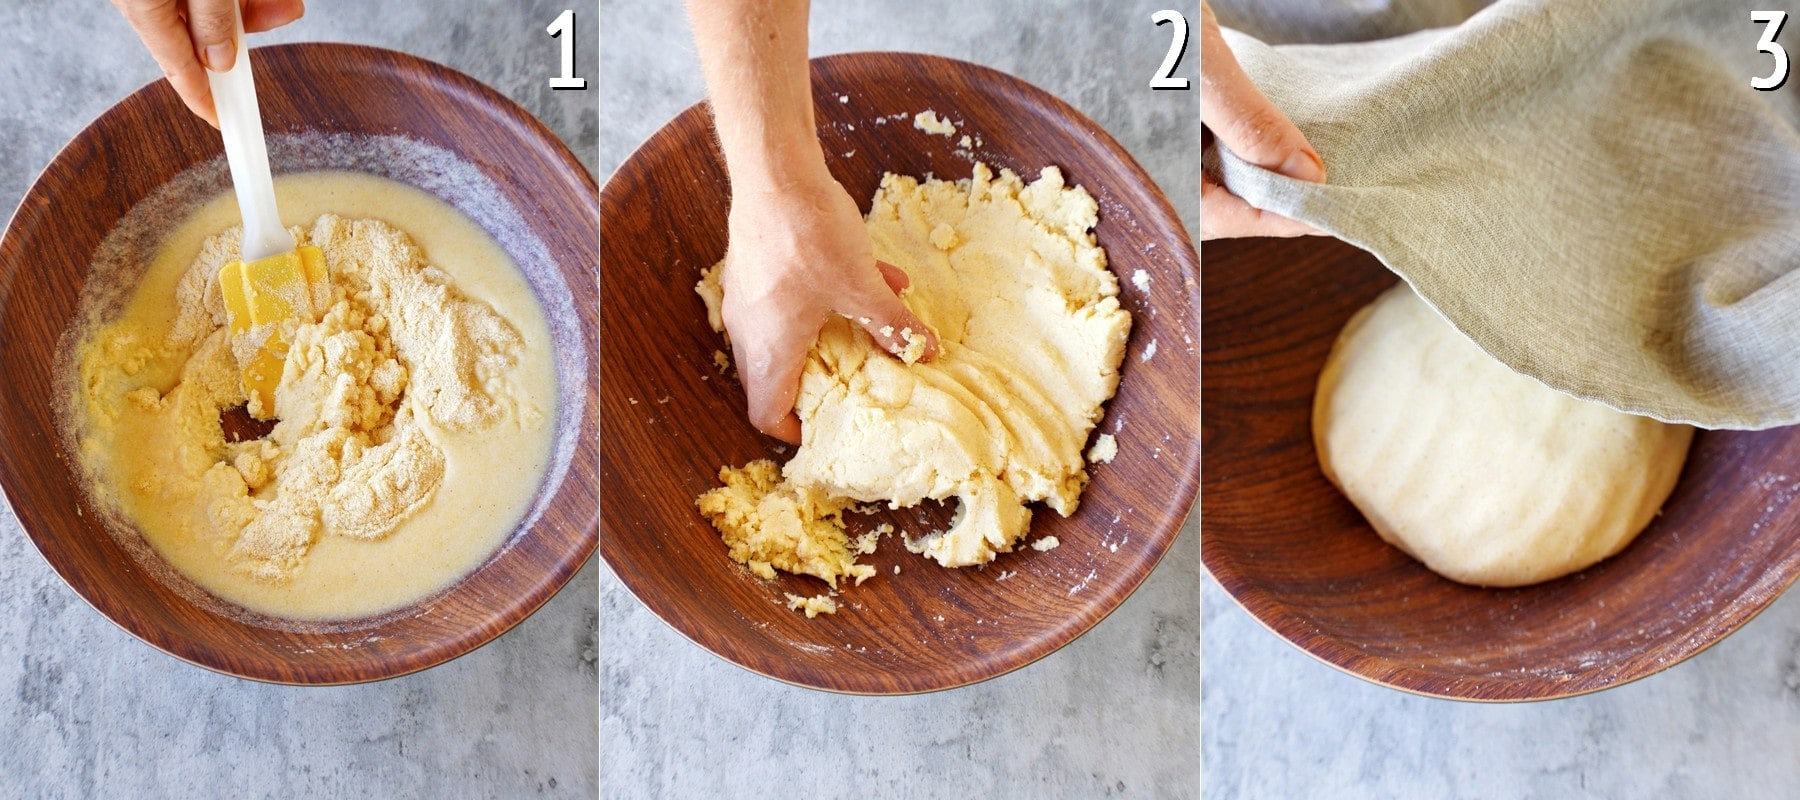 3 pics showing how to make arepa dough